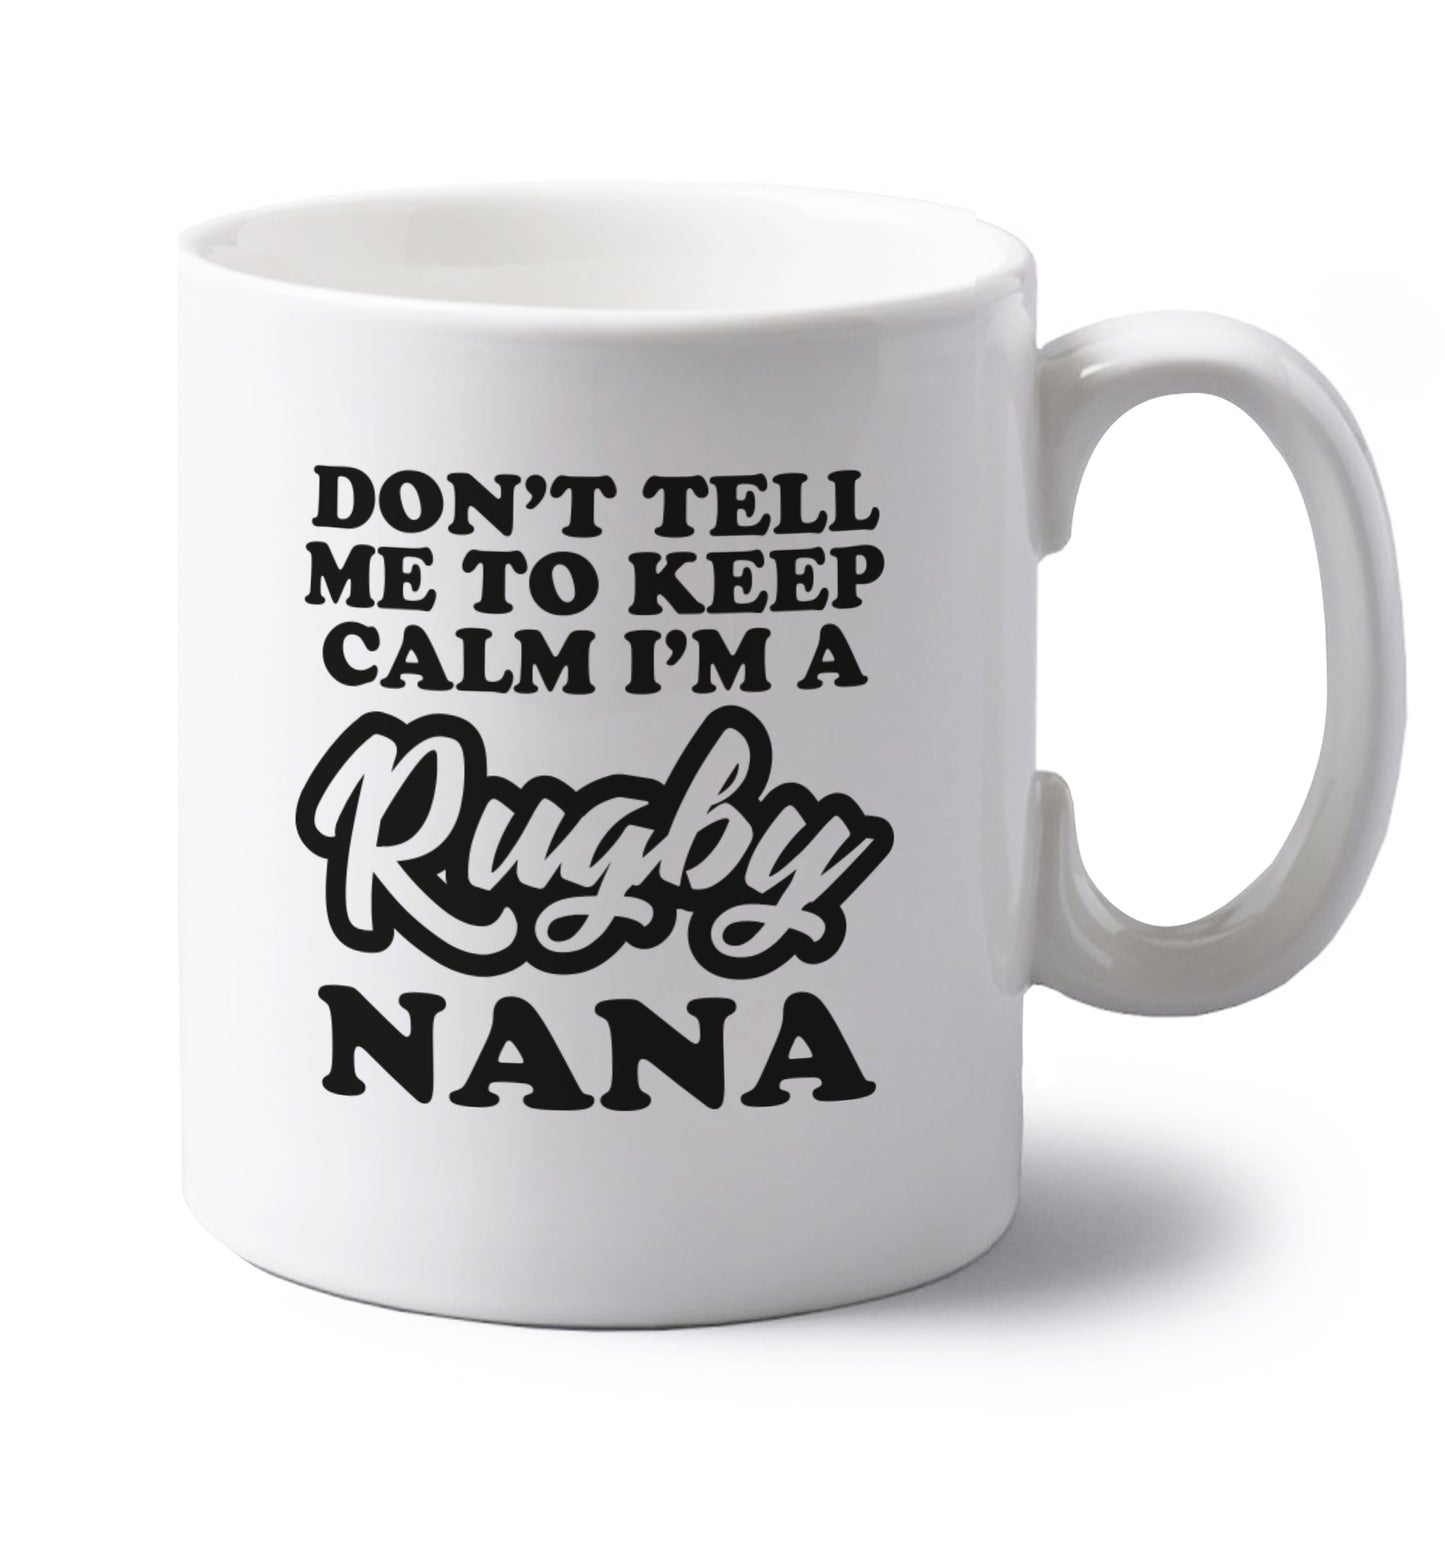 Don't tell me to keep calm I'm a rugby nana left handed white ceramic mug 